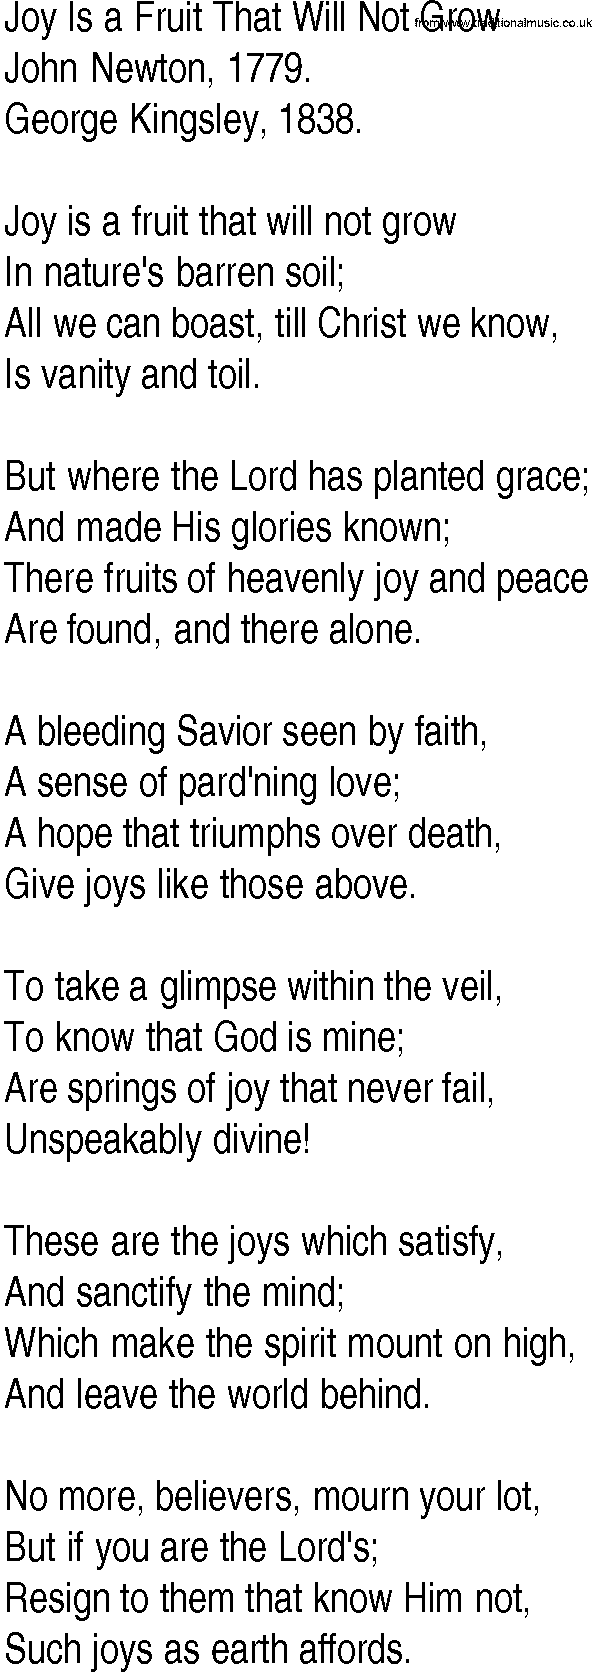 Hymn and Gospel Song: Joy Is a Fruit That Will Not Grow by John Newton lyrics